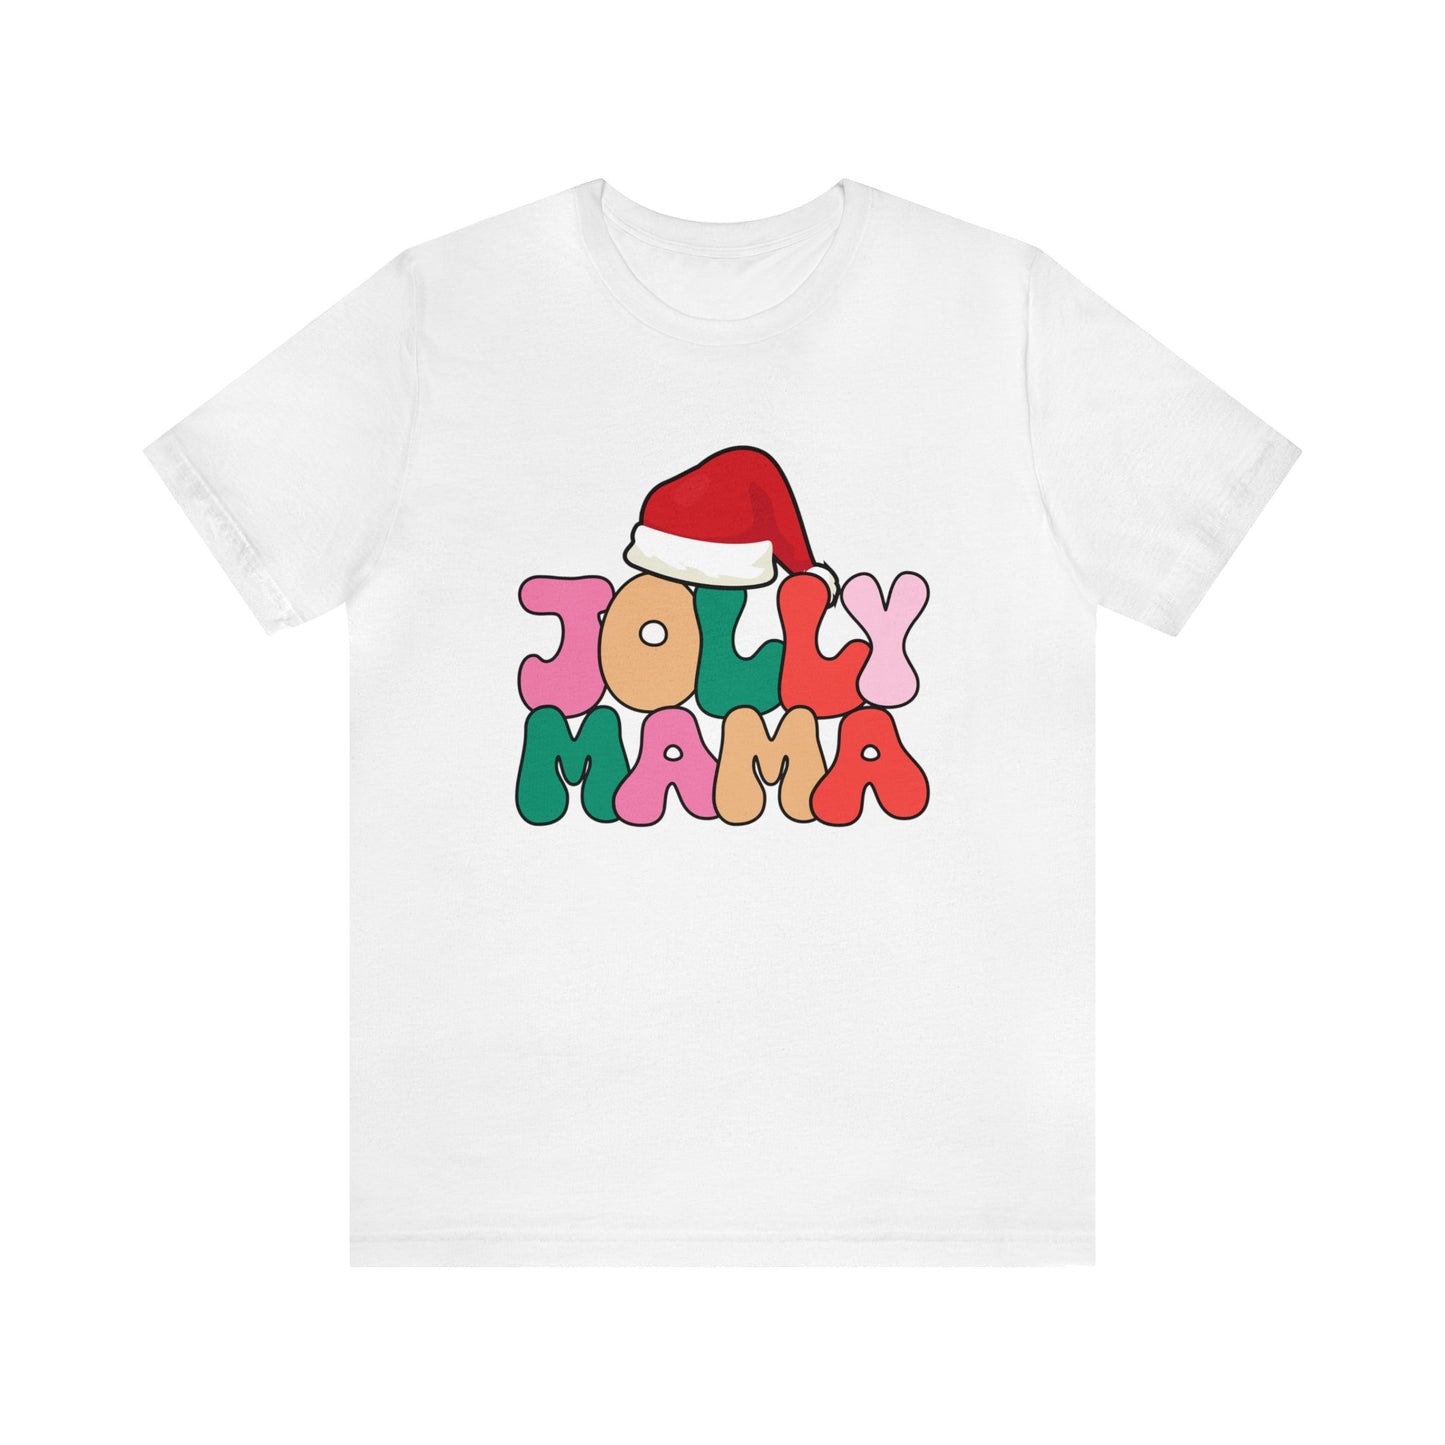 Jolly Mama Short Sleeve Christmas T Shirts